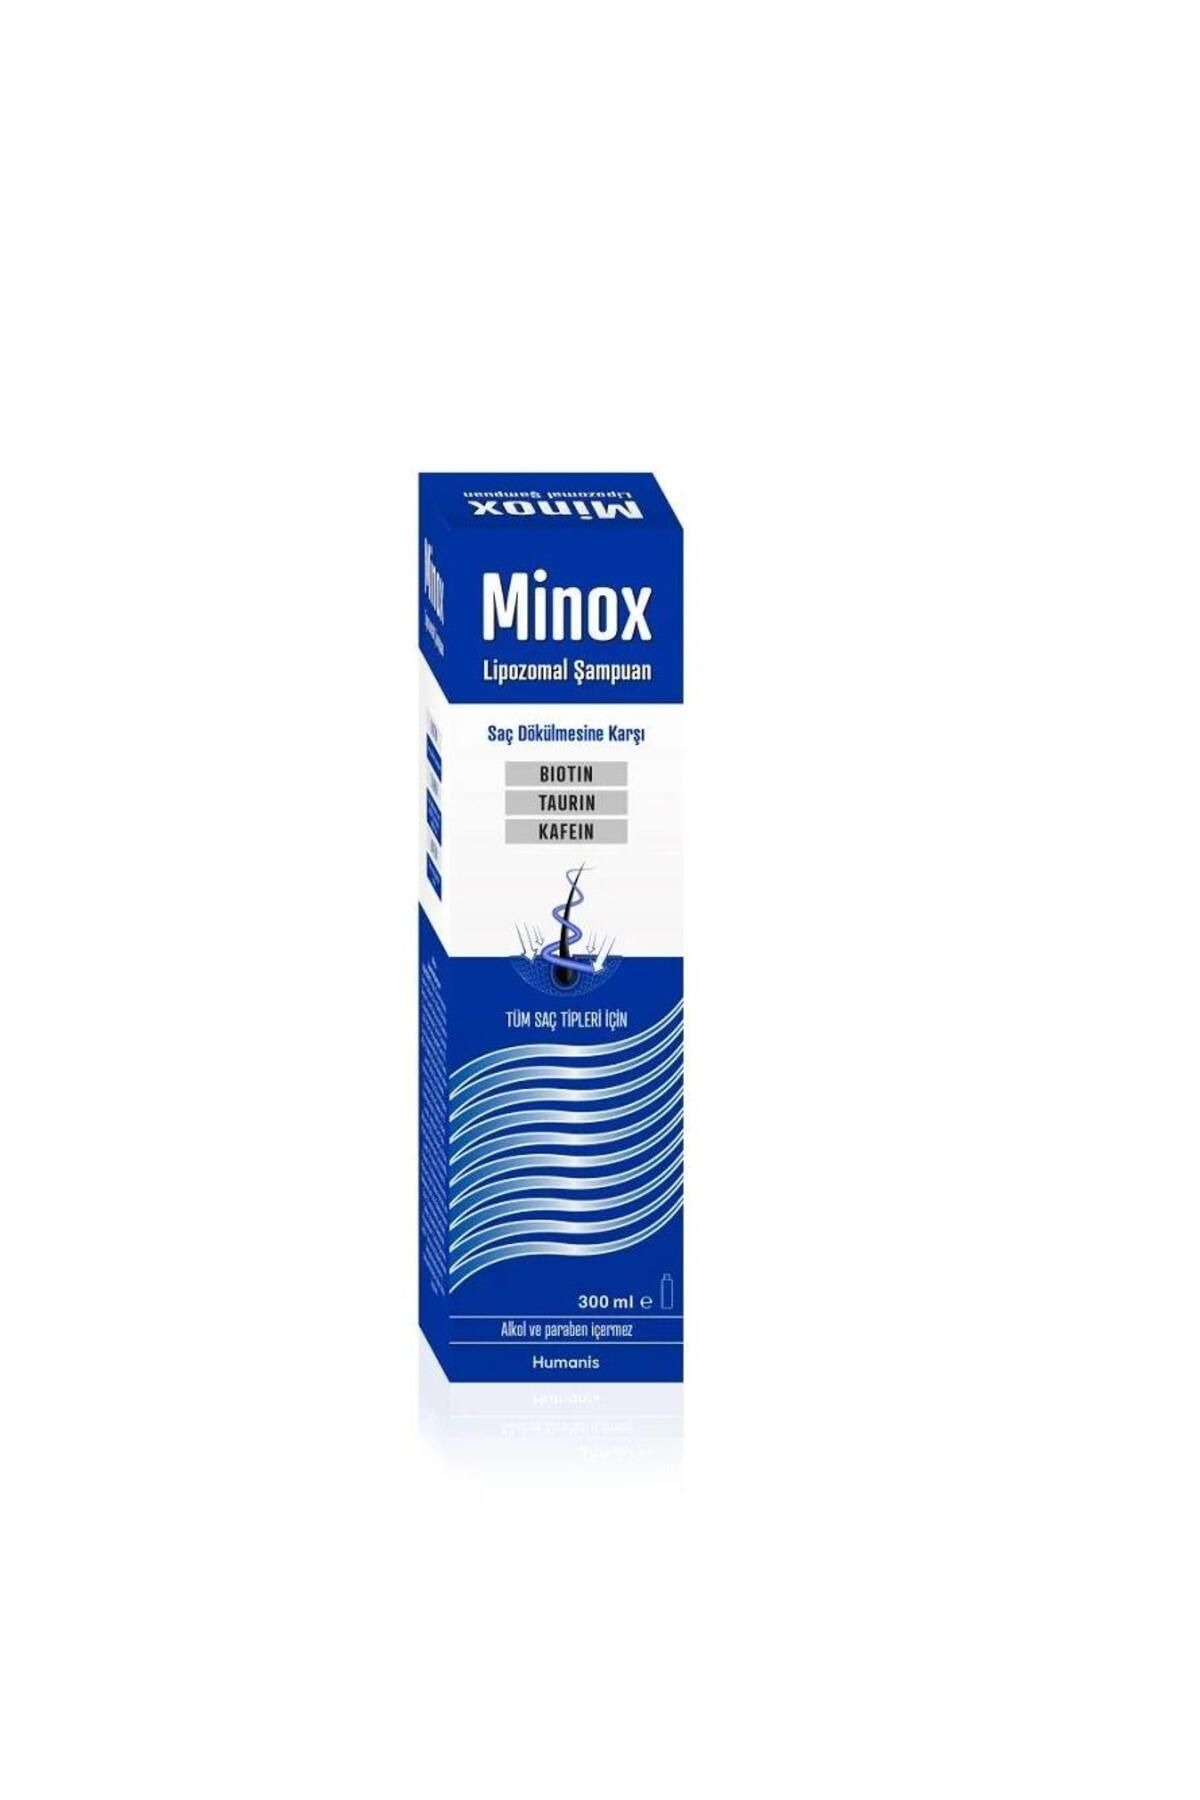 MİNOX Minox Lipozomal Tüm Saç Tipleri Için Saç Dökülmesine Karşı Şampuan 300 ml farmavantaj0031